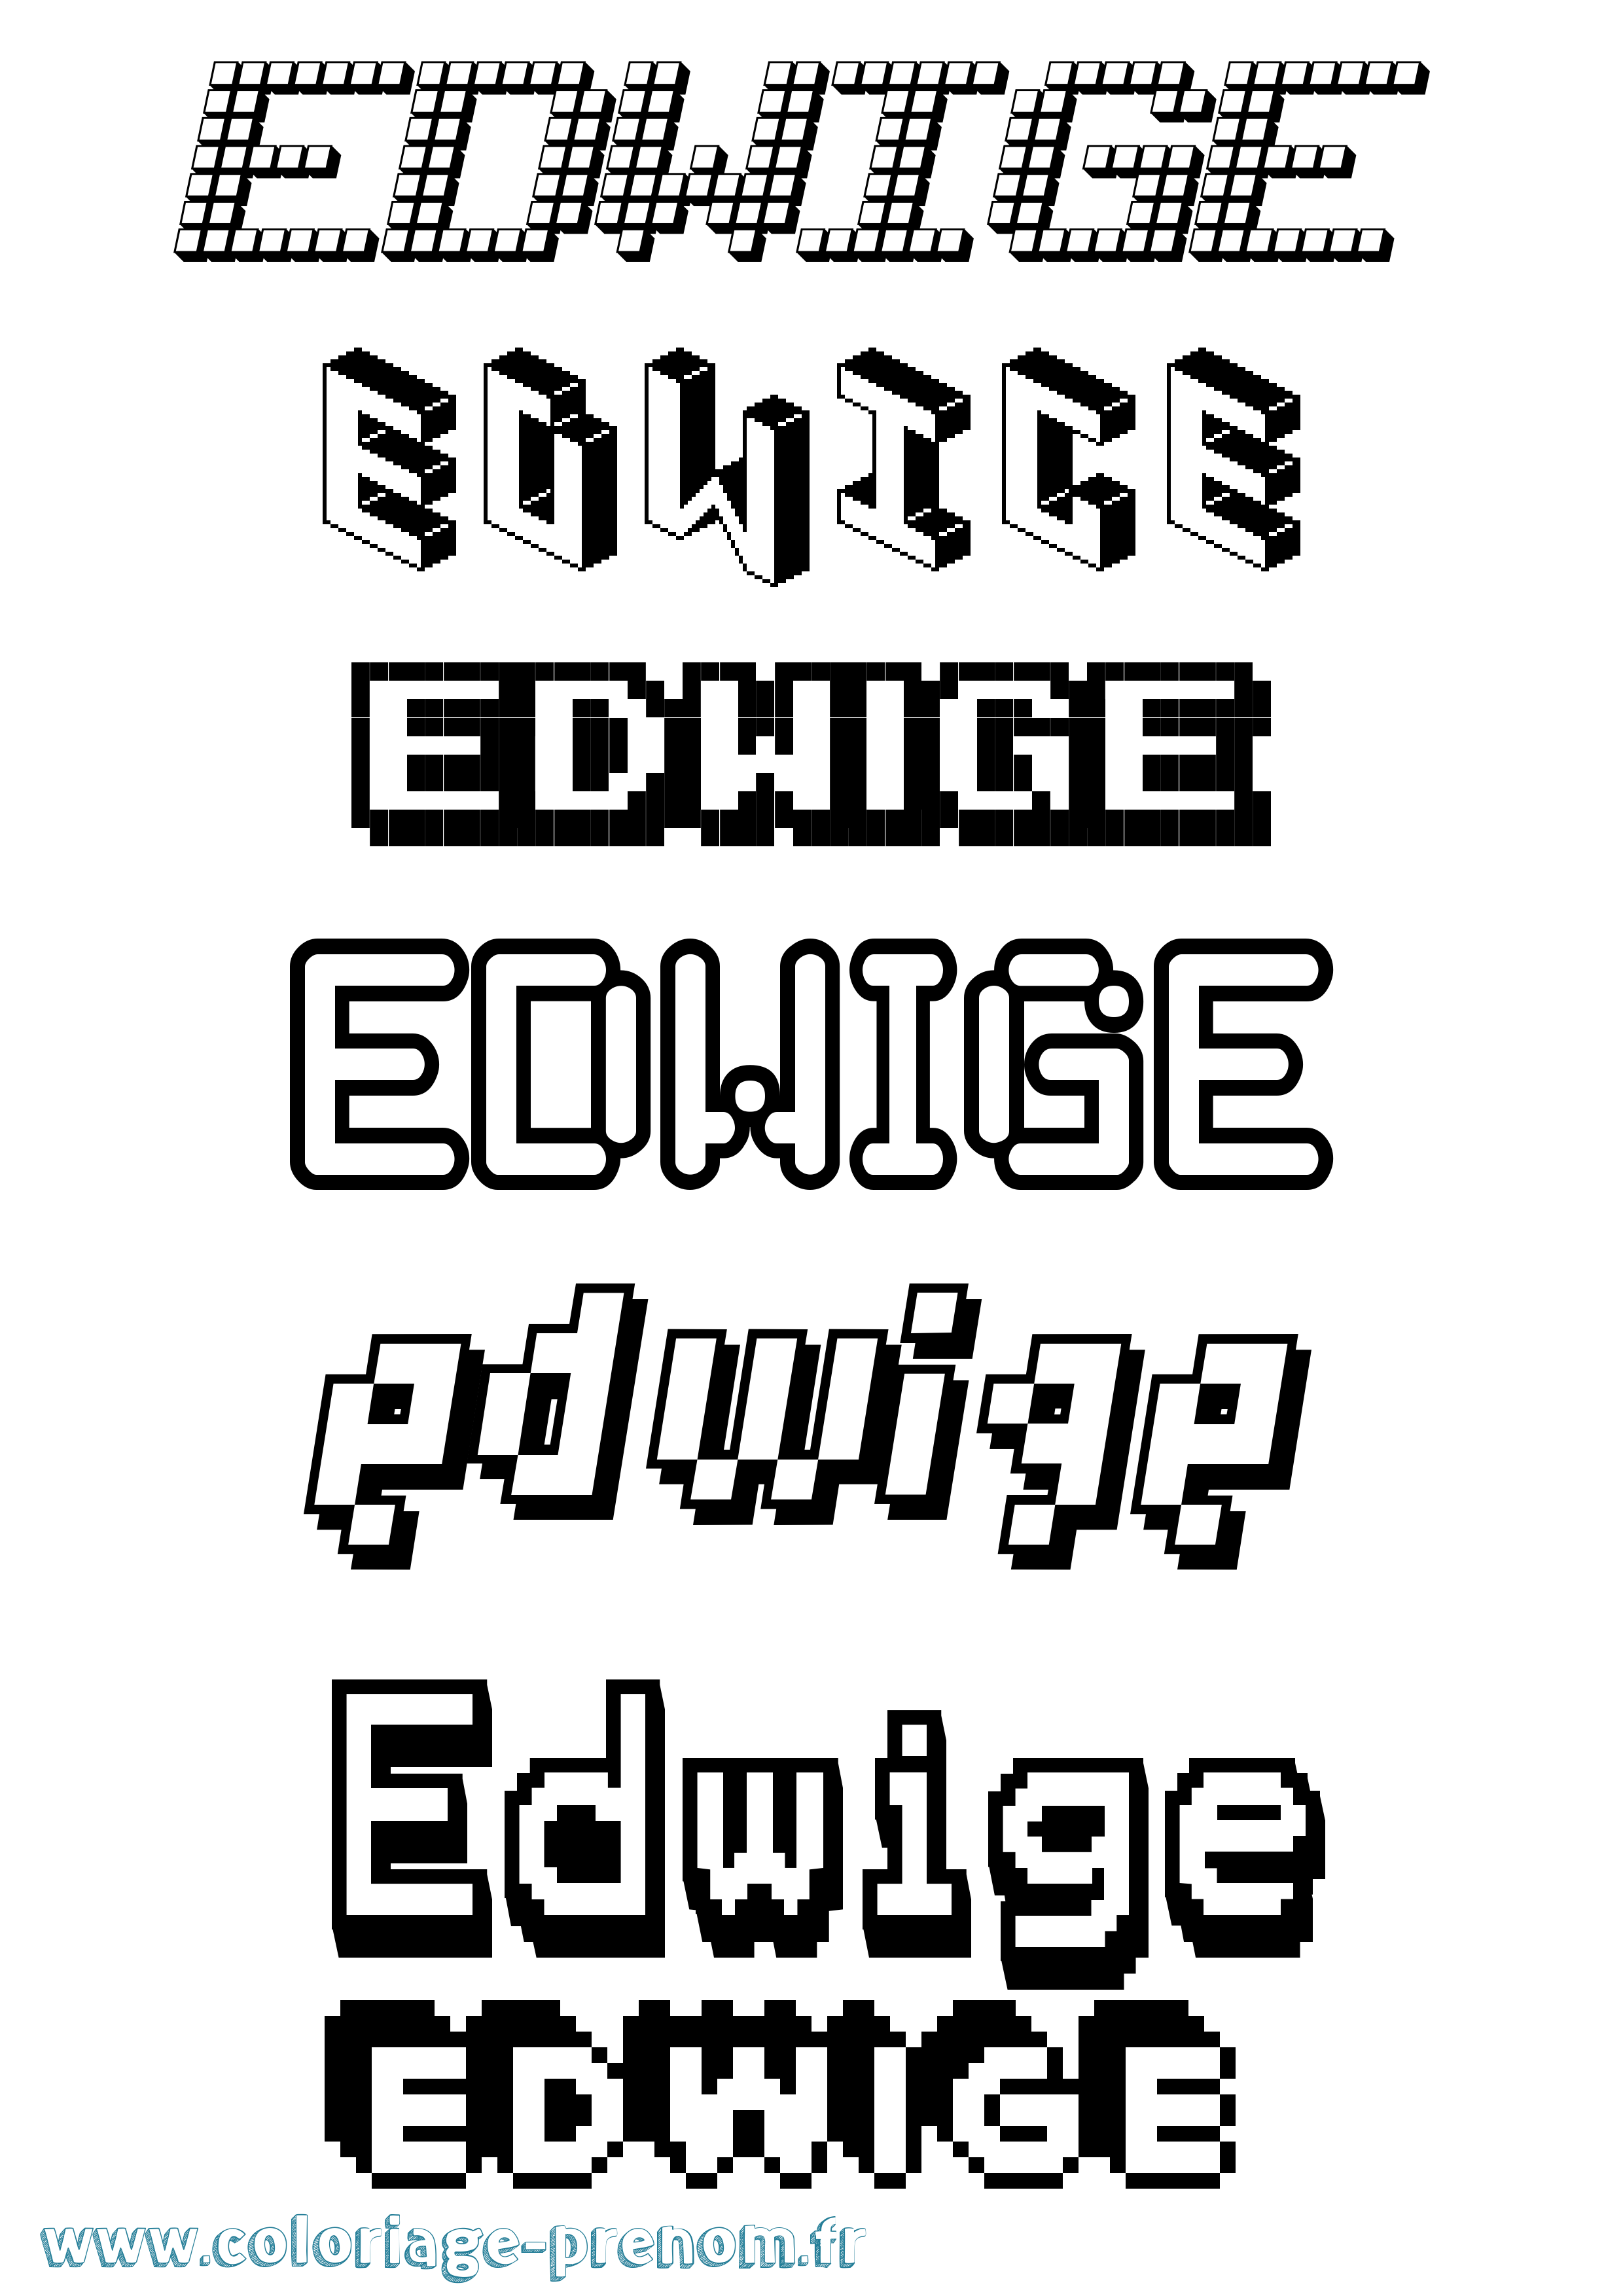 Coloriage prénom Edwige Pixel